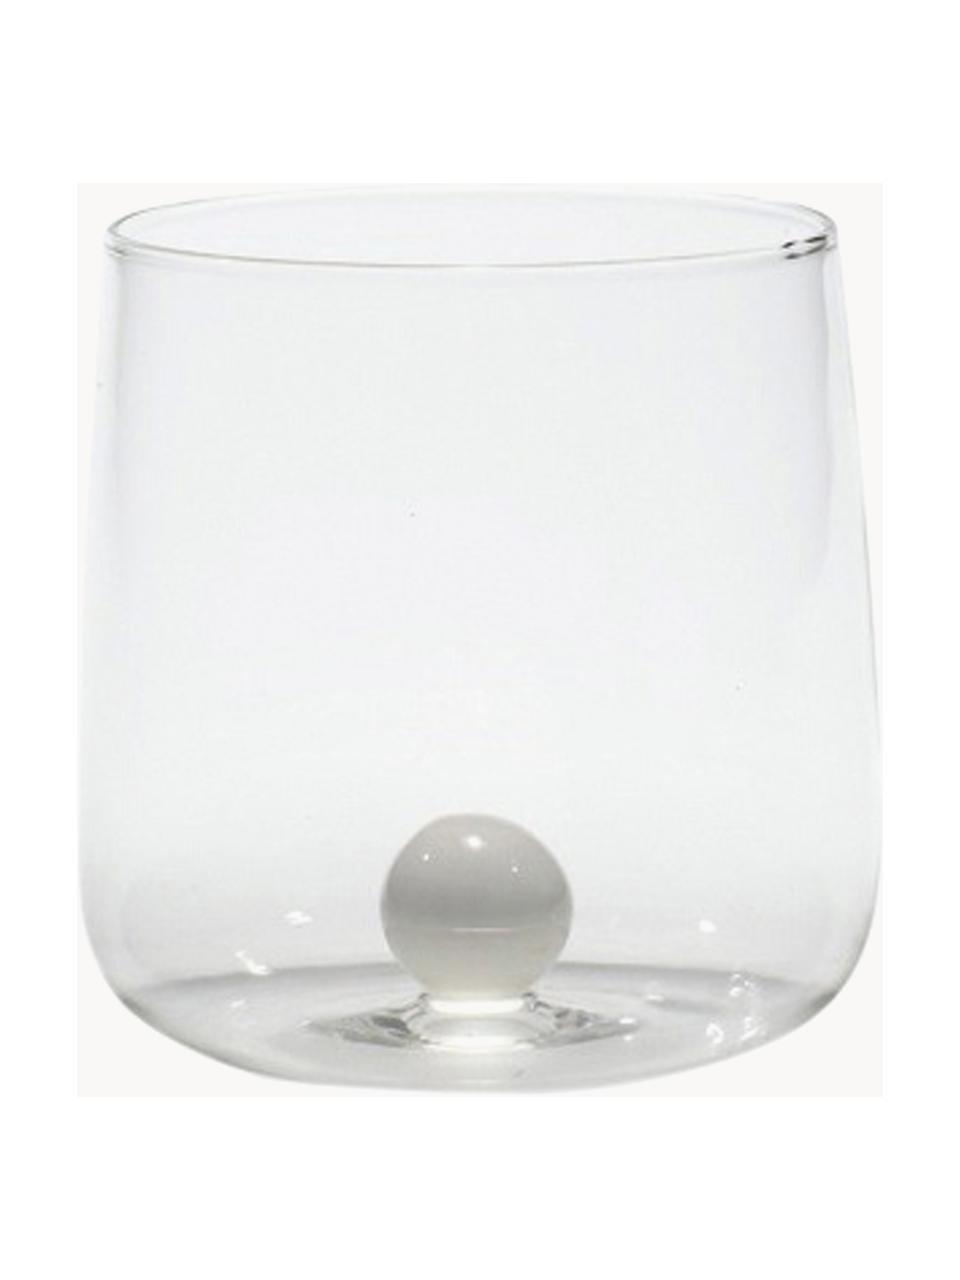 Vasos de agua soplados Bilia, 6 uds., Vidrio de borosilicato, Transparente, blanco, Ø 9 x Al 9 cm, 440 ml